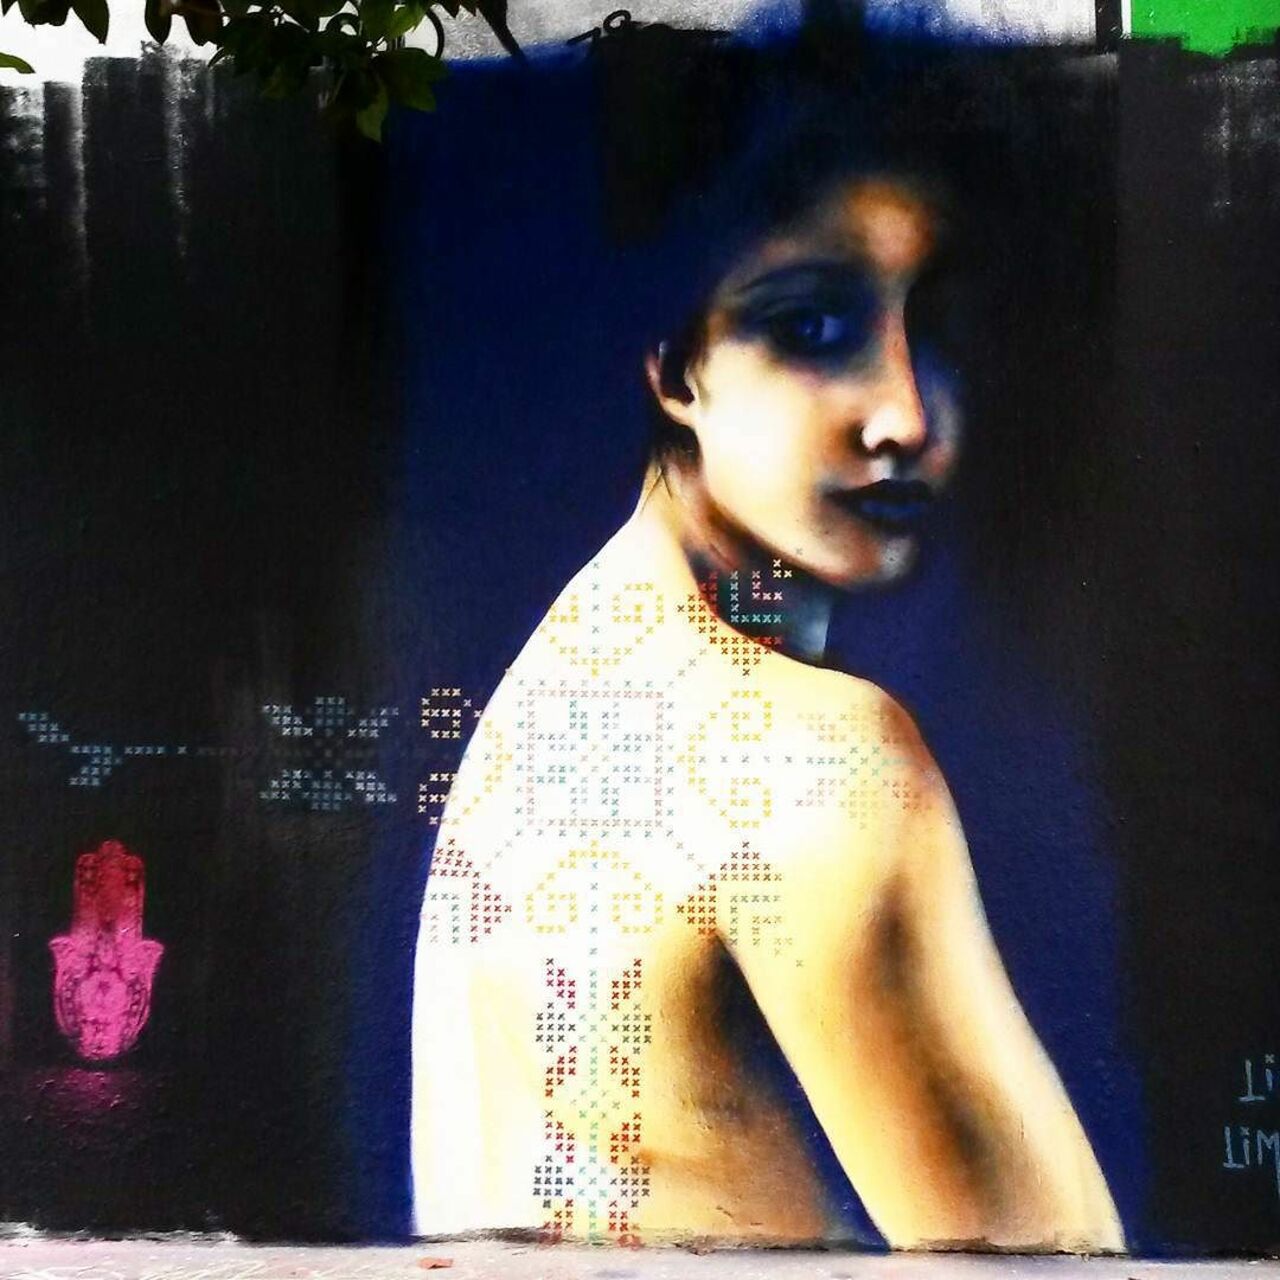 #Paris #graffiti photo by @princessepepett http://ift.tt/1MXyWek #StreetArt https://t.co/aO2VEQHMdF